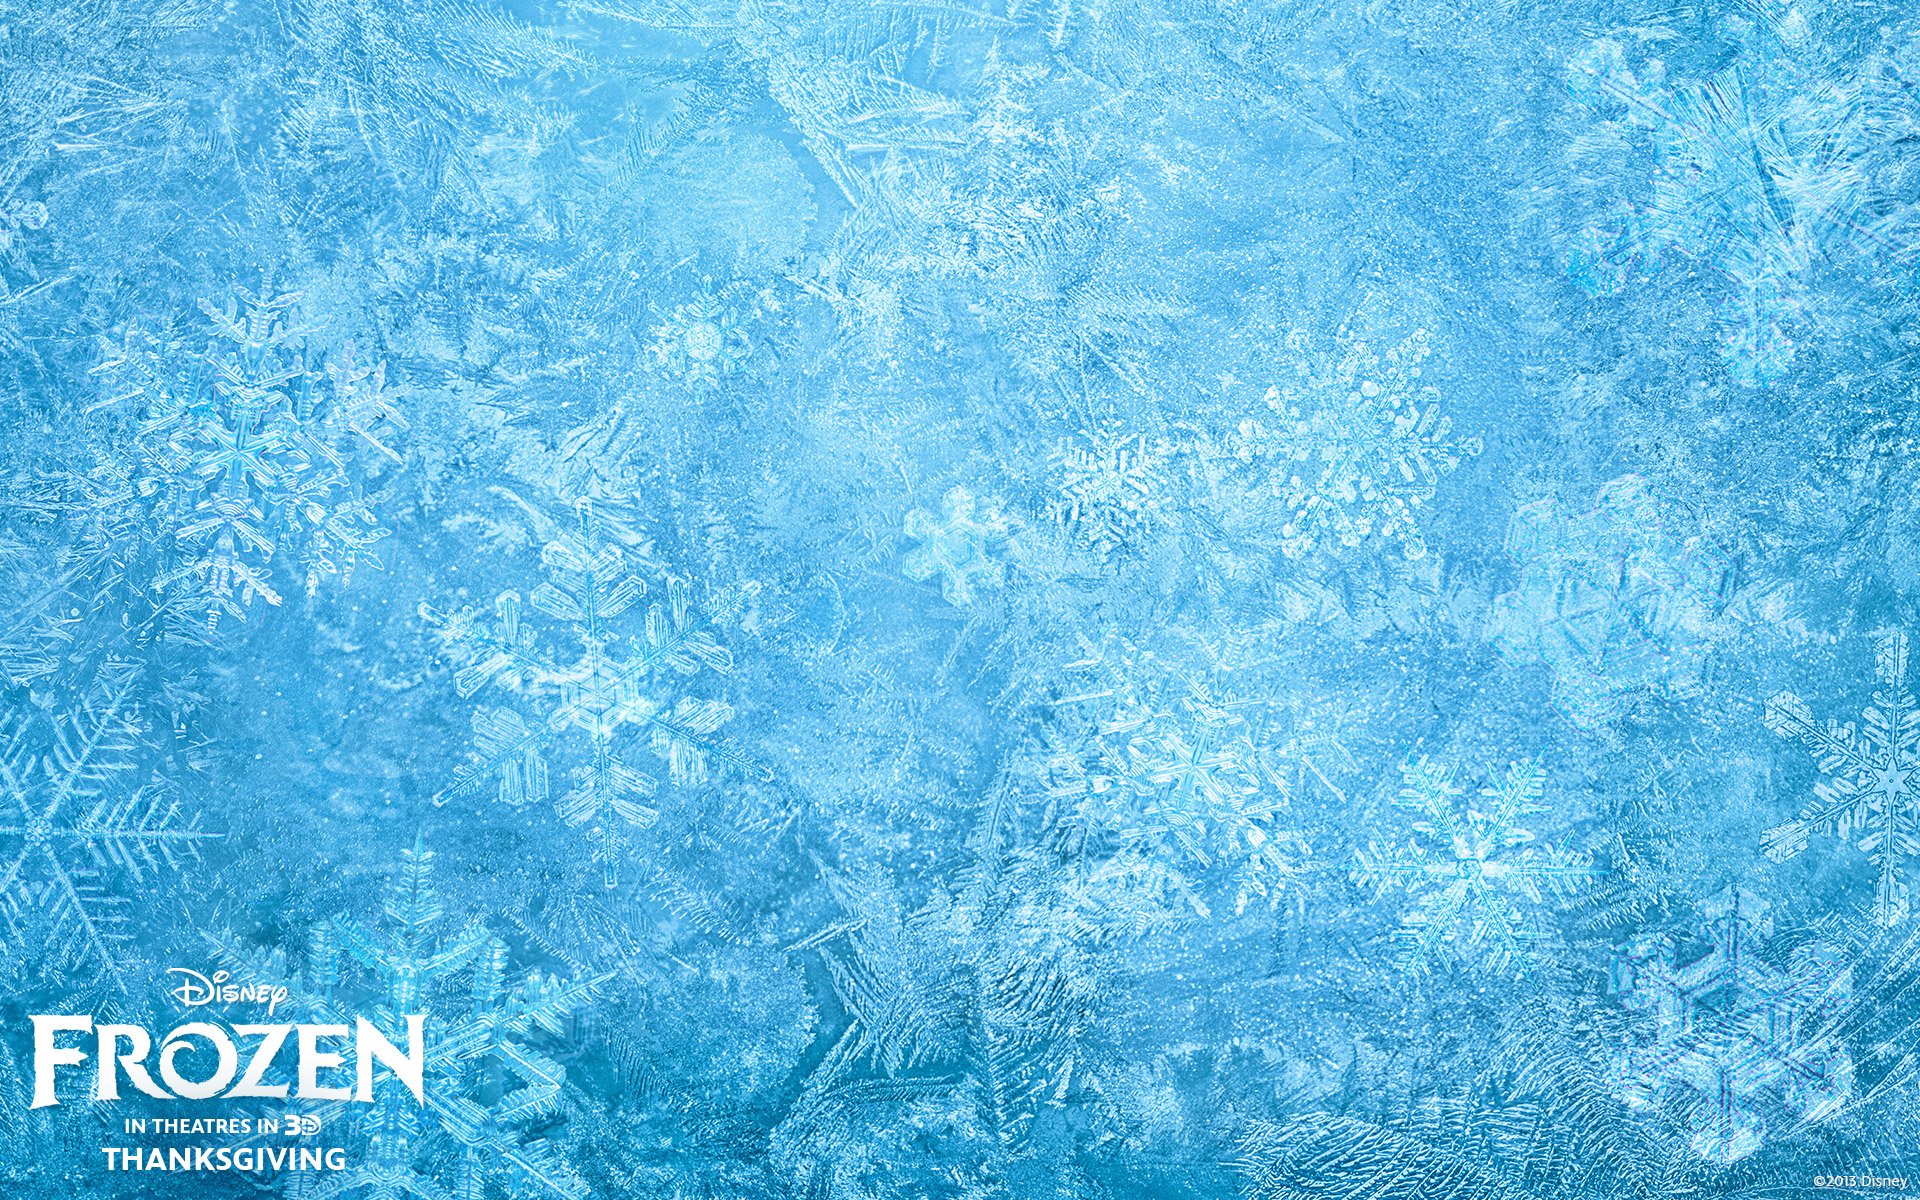  Frozen Disneys Frozen CG animated movie wallpaper image background 1920x1200